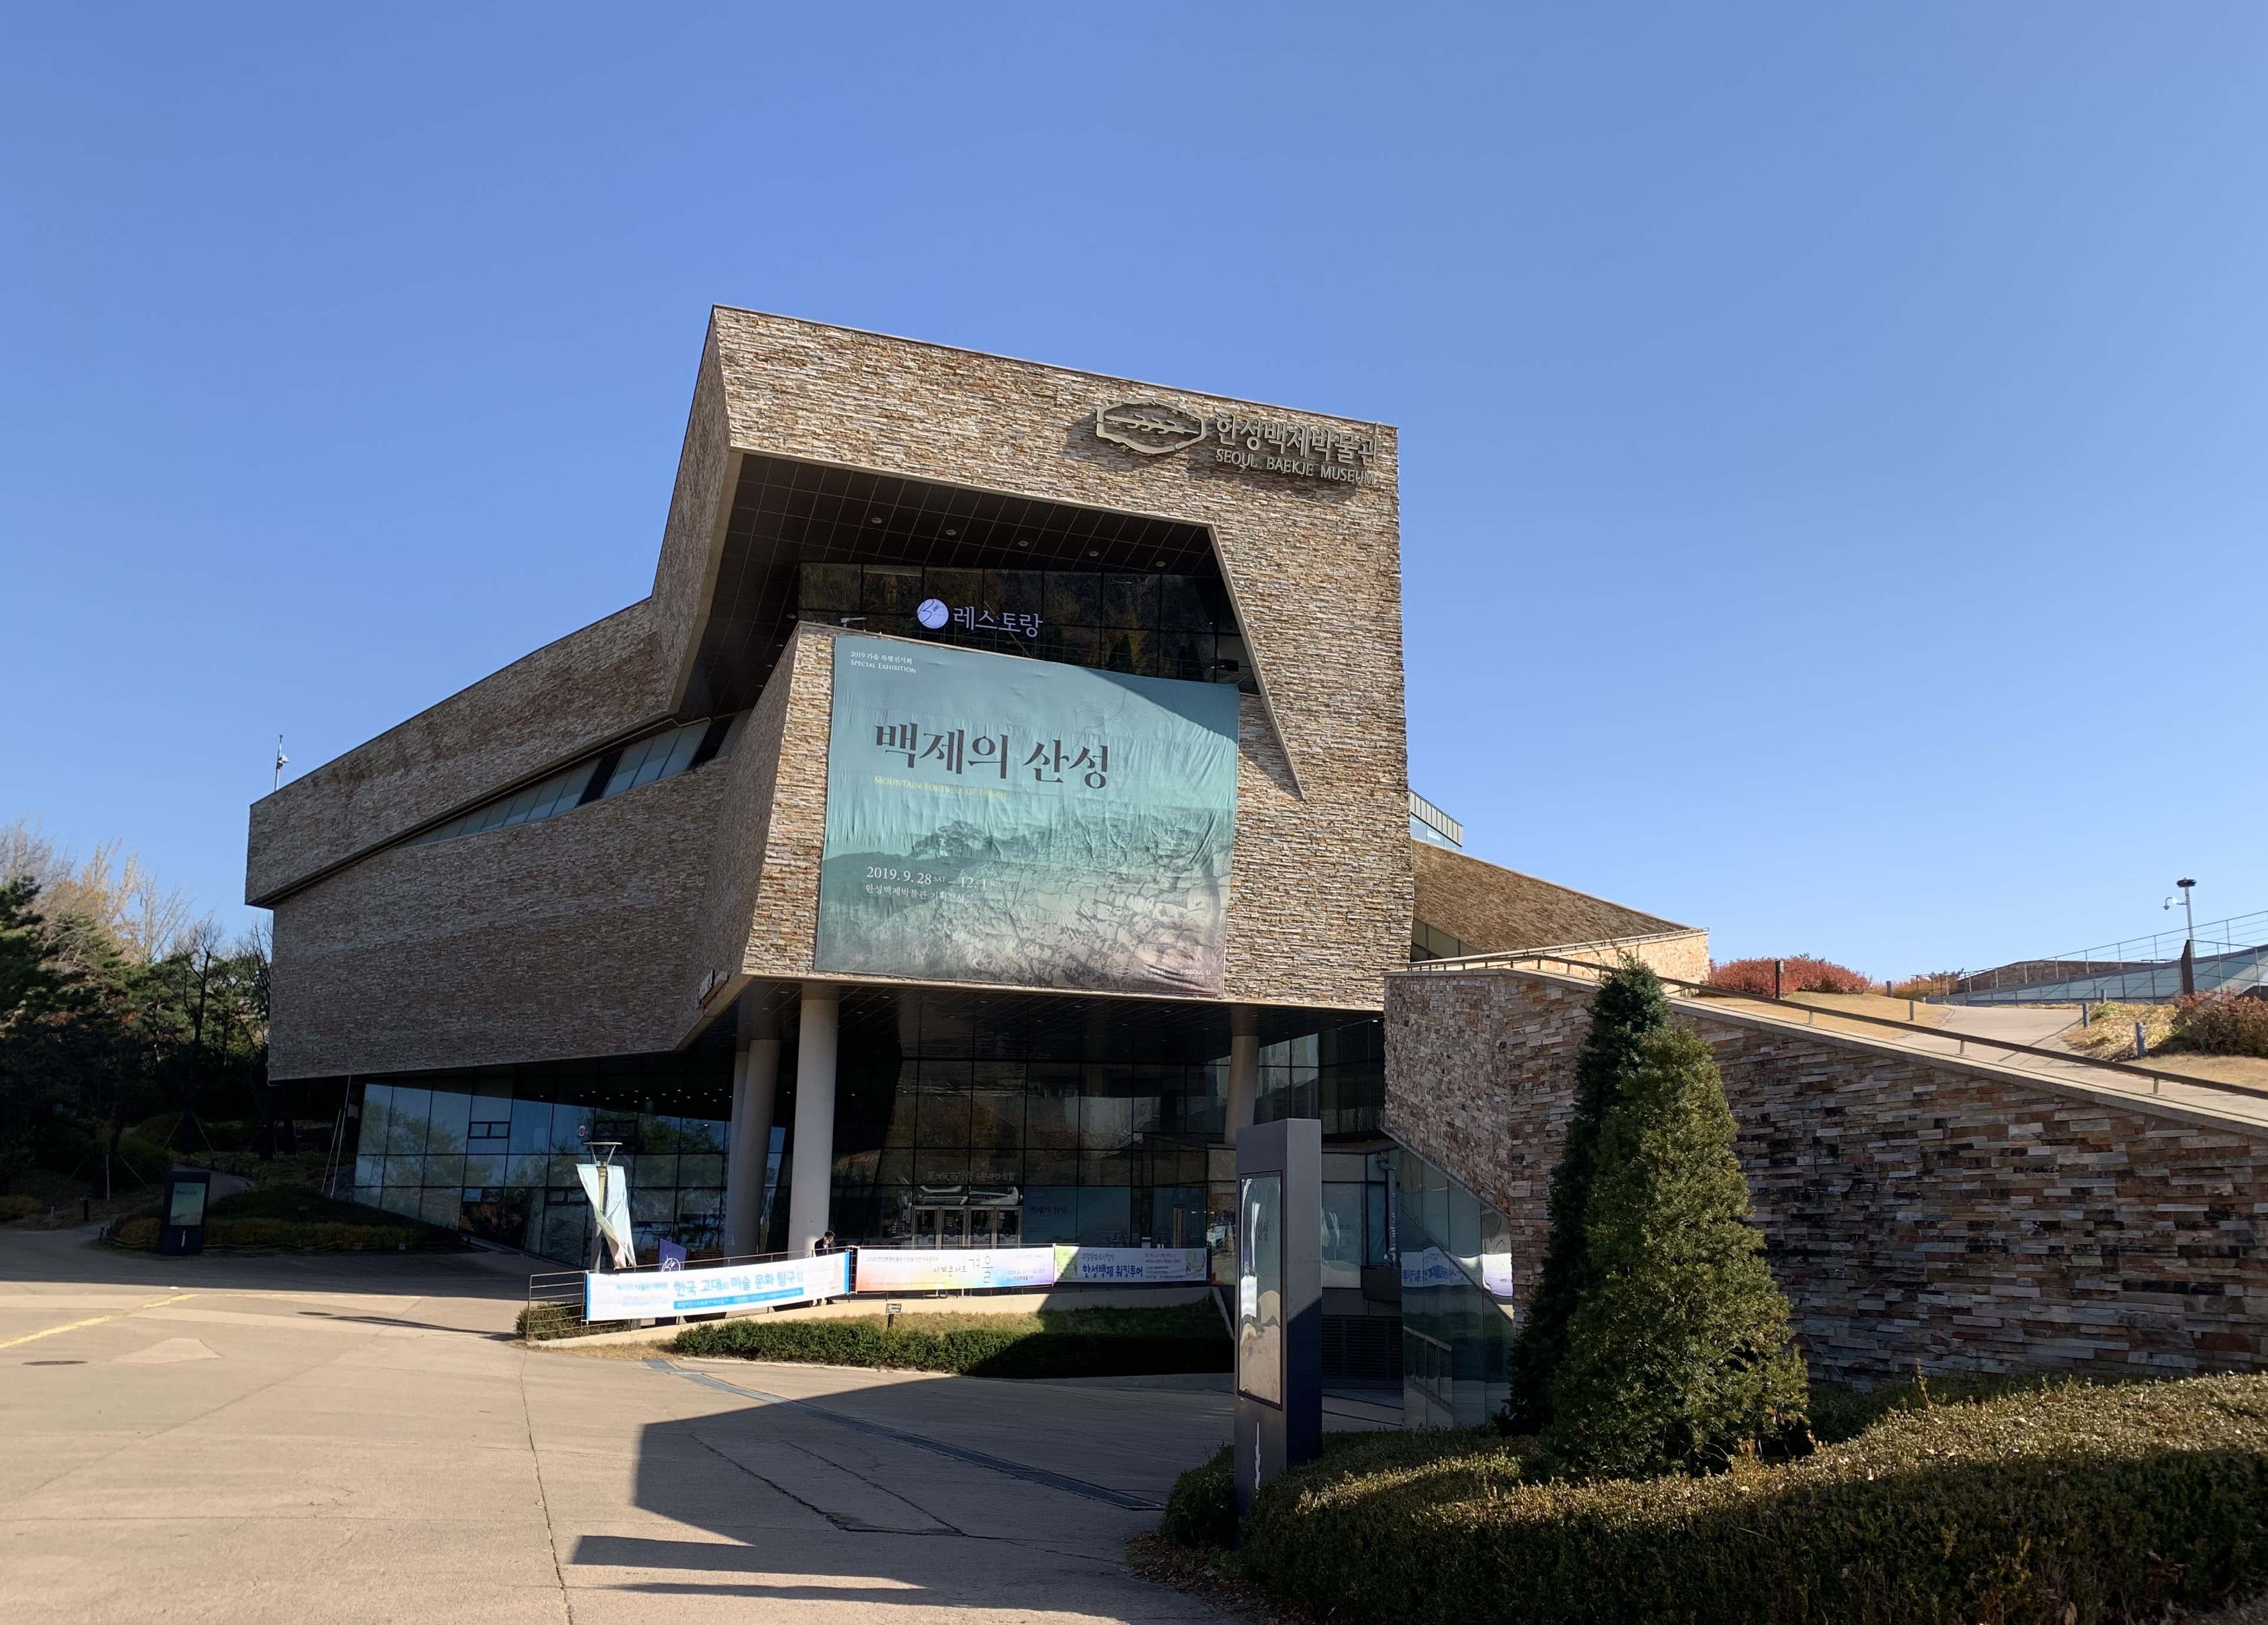 Seoul Baekje Museum0 : A view of the Hanseong Baekje Museum from the outside